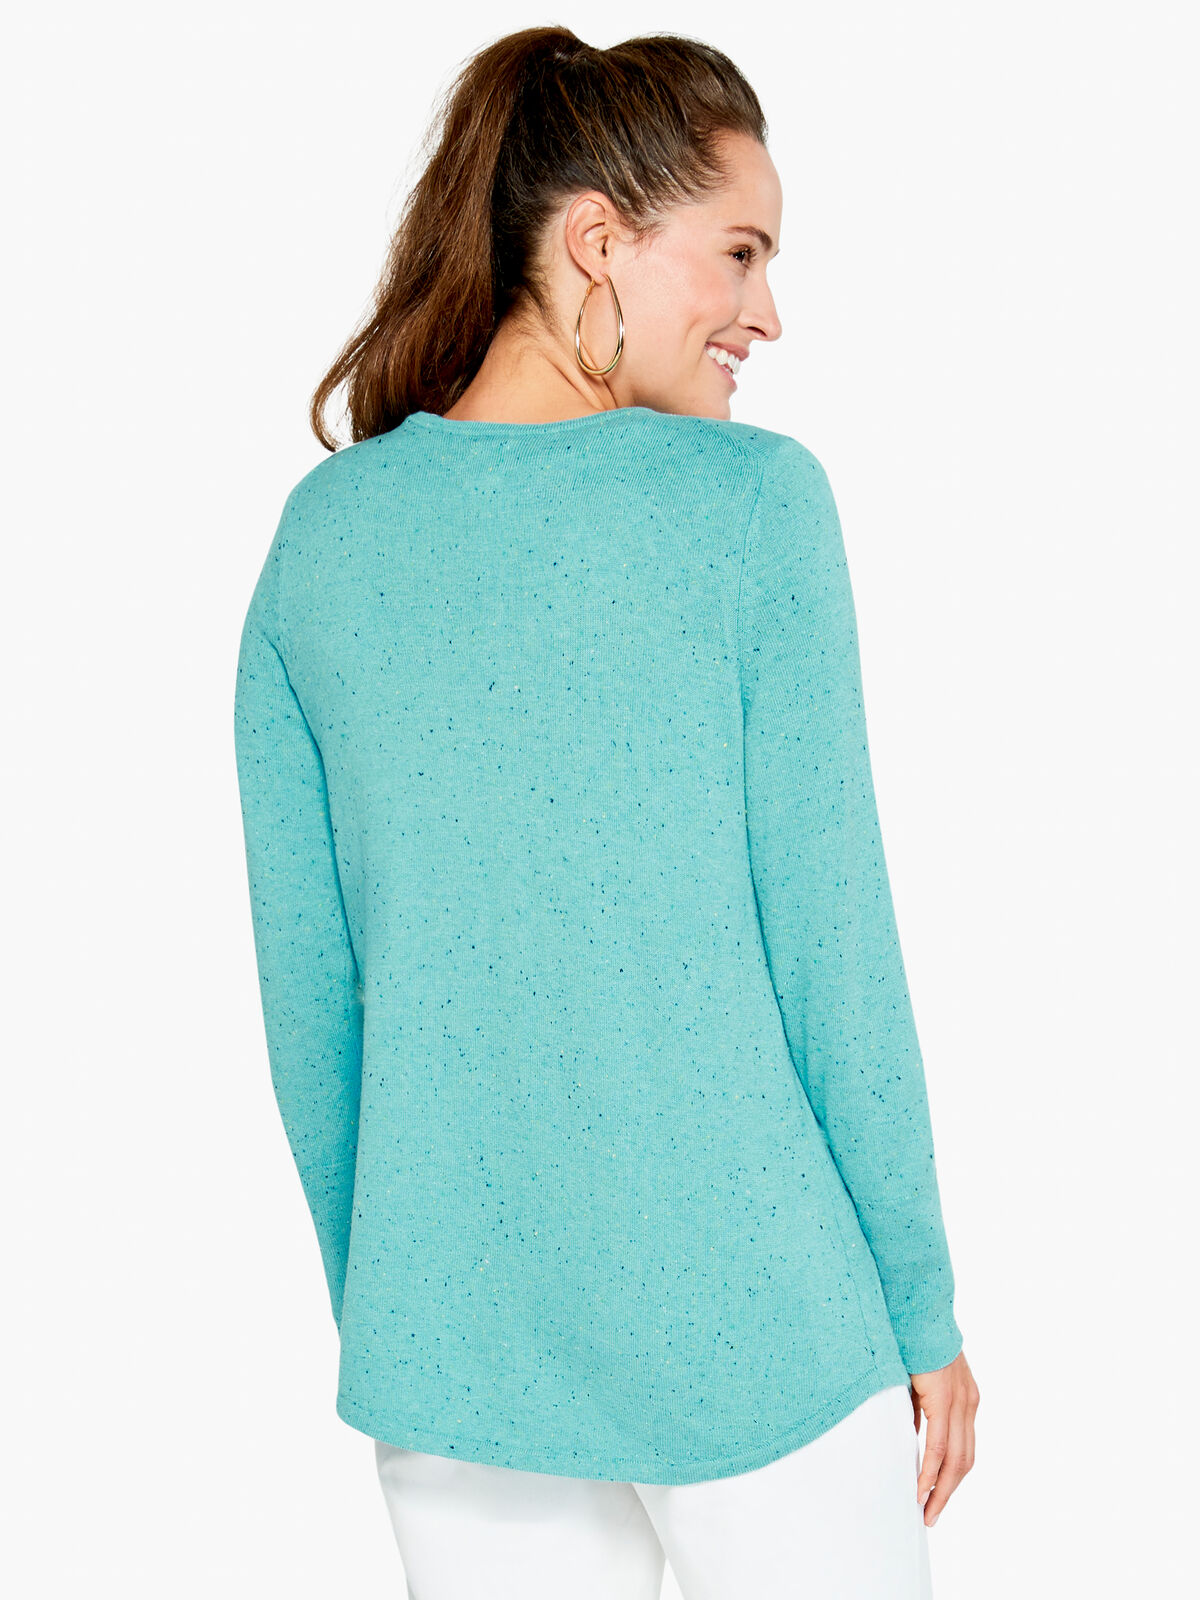 Speckled Vital V Neck Sweater